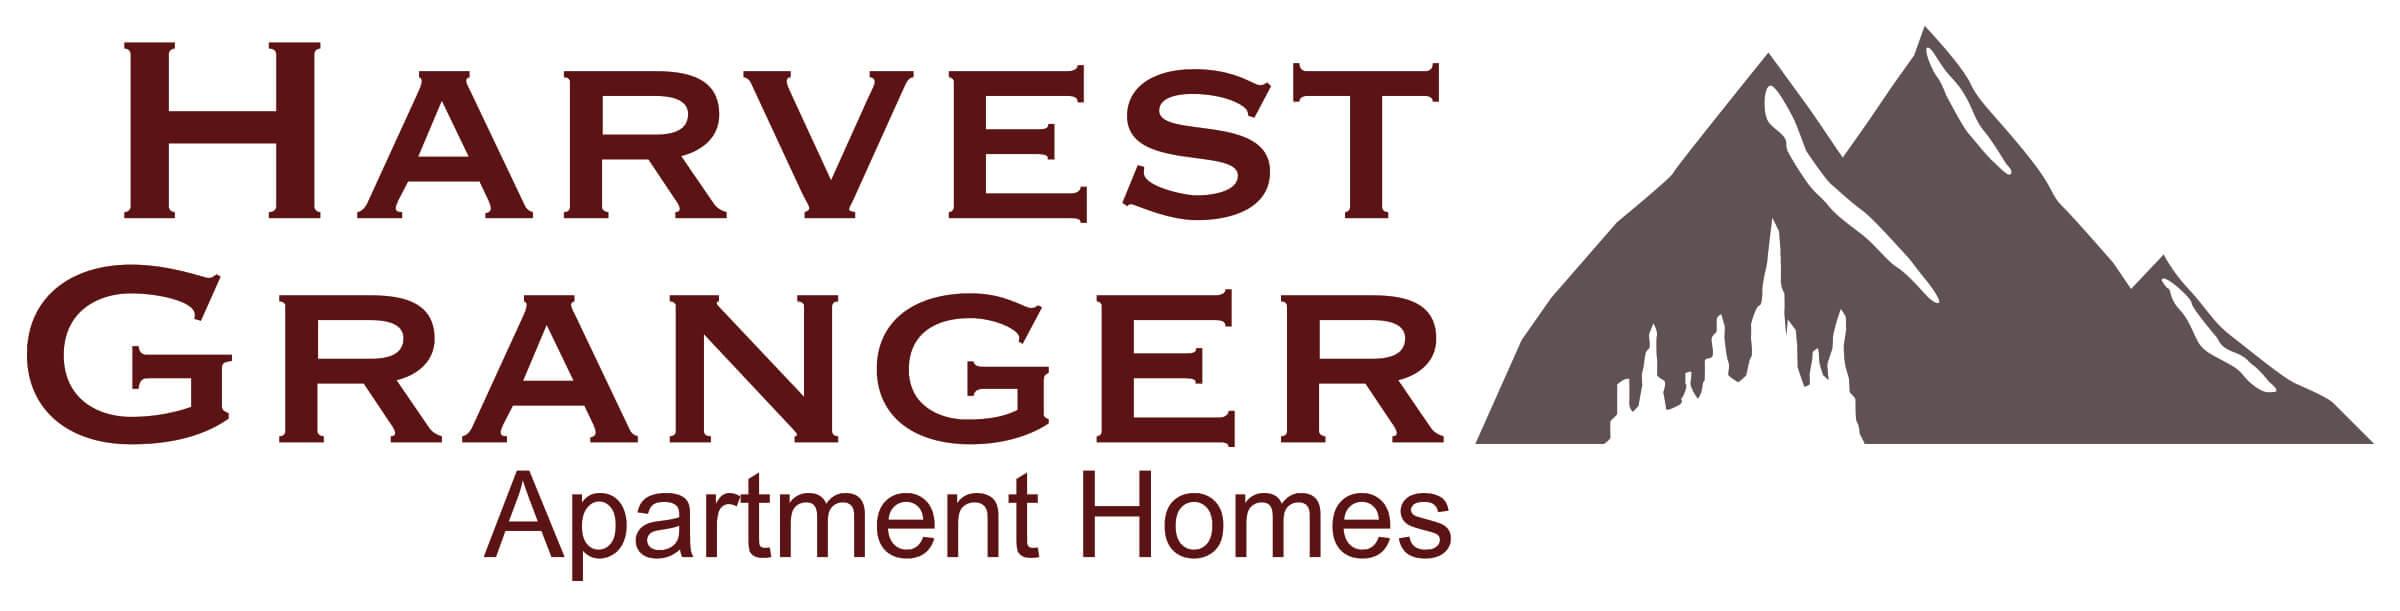 Granger Logo - Apartments in Billings, MT - Harvest Granger Apartments in Billings, MT